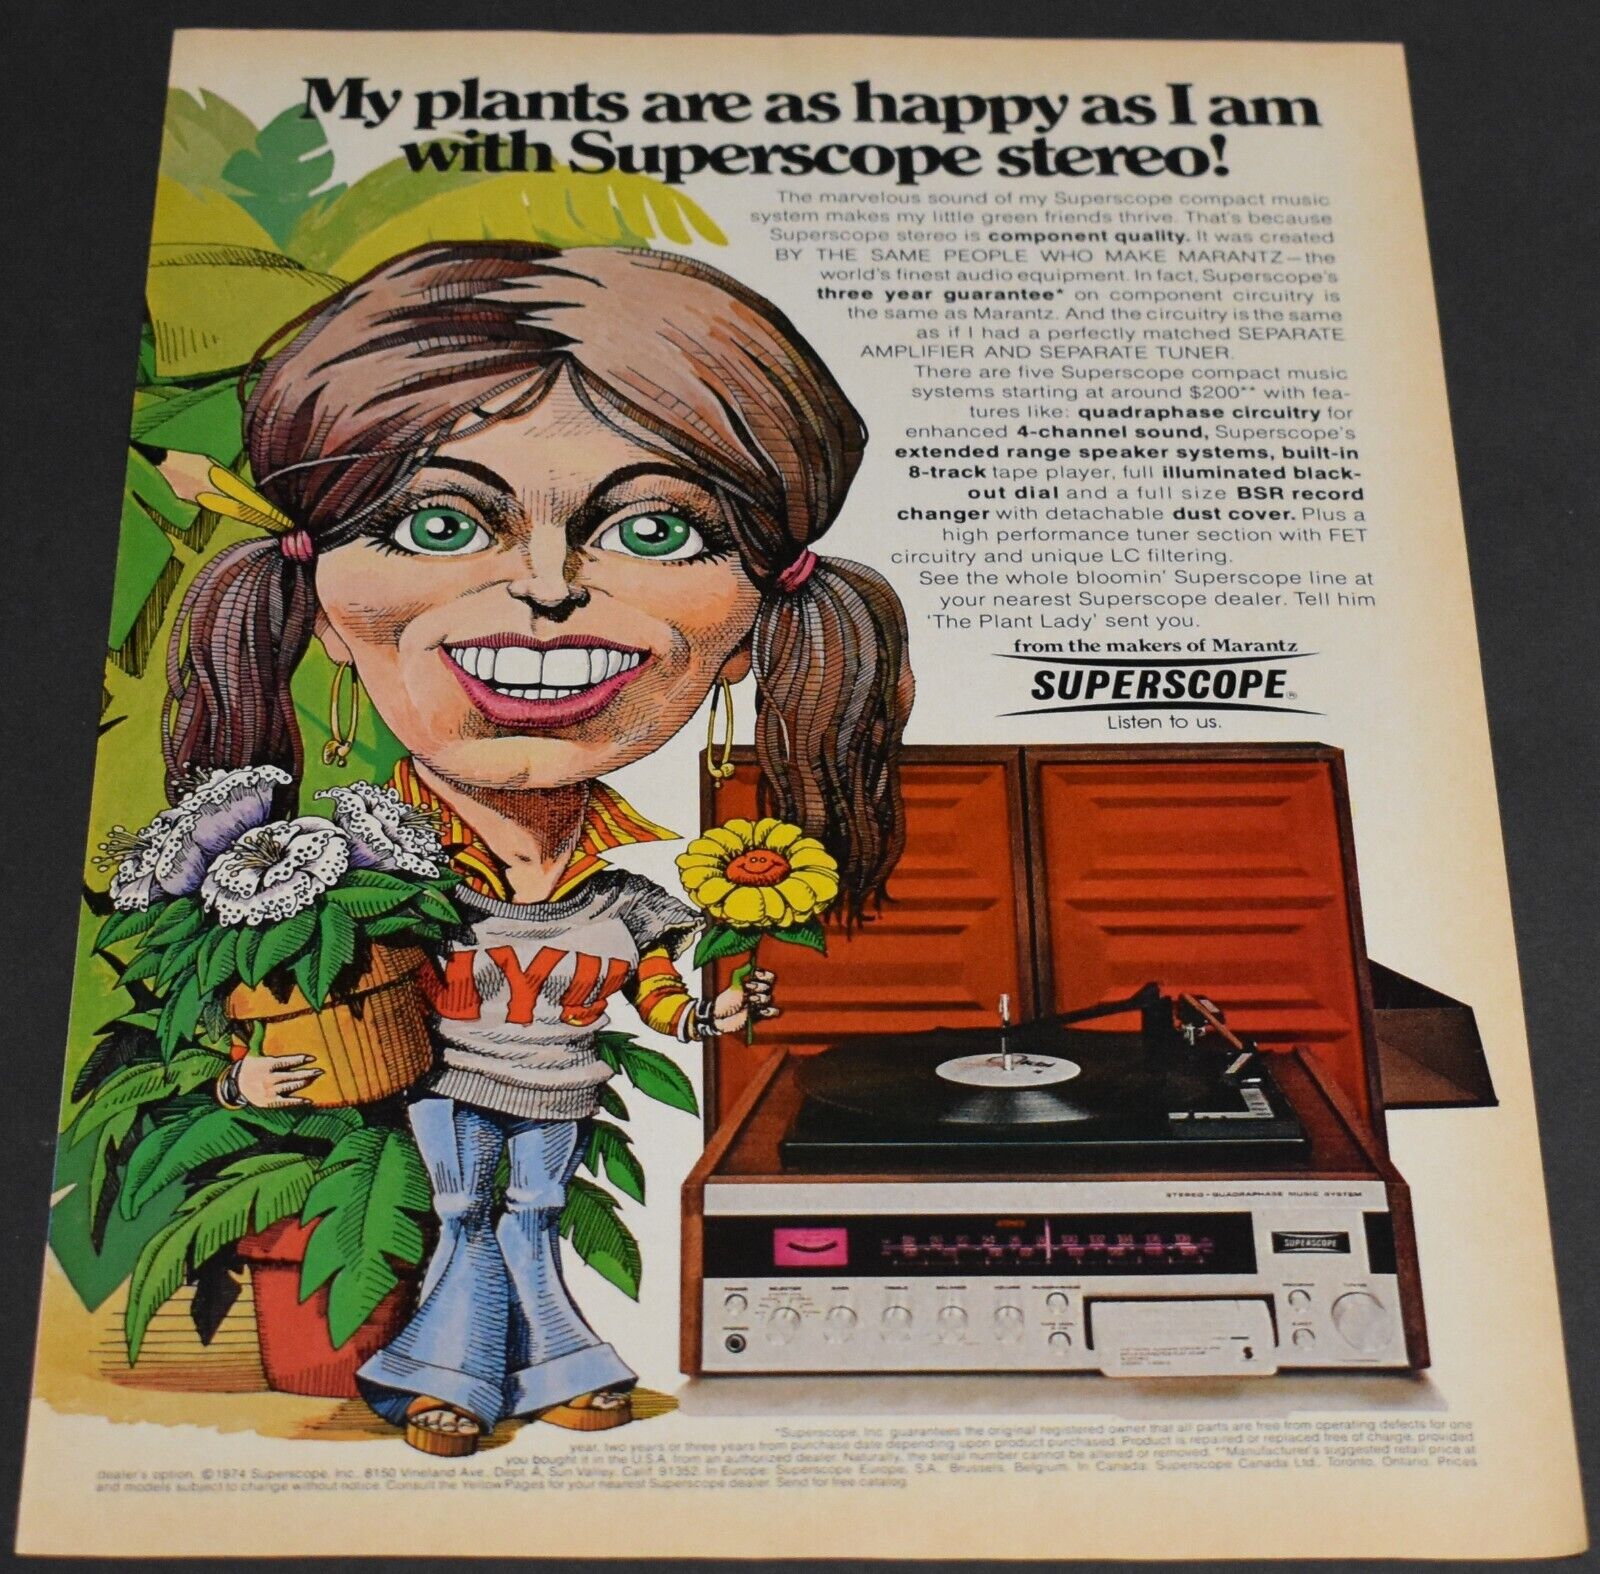 1975 Print Ad Superscope Marantz Stereo Whole Bloomin\' NYU Quadraphase Art Music